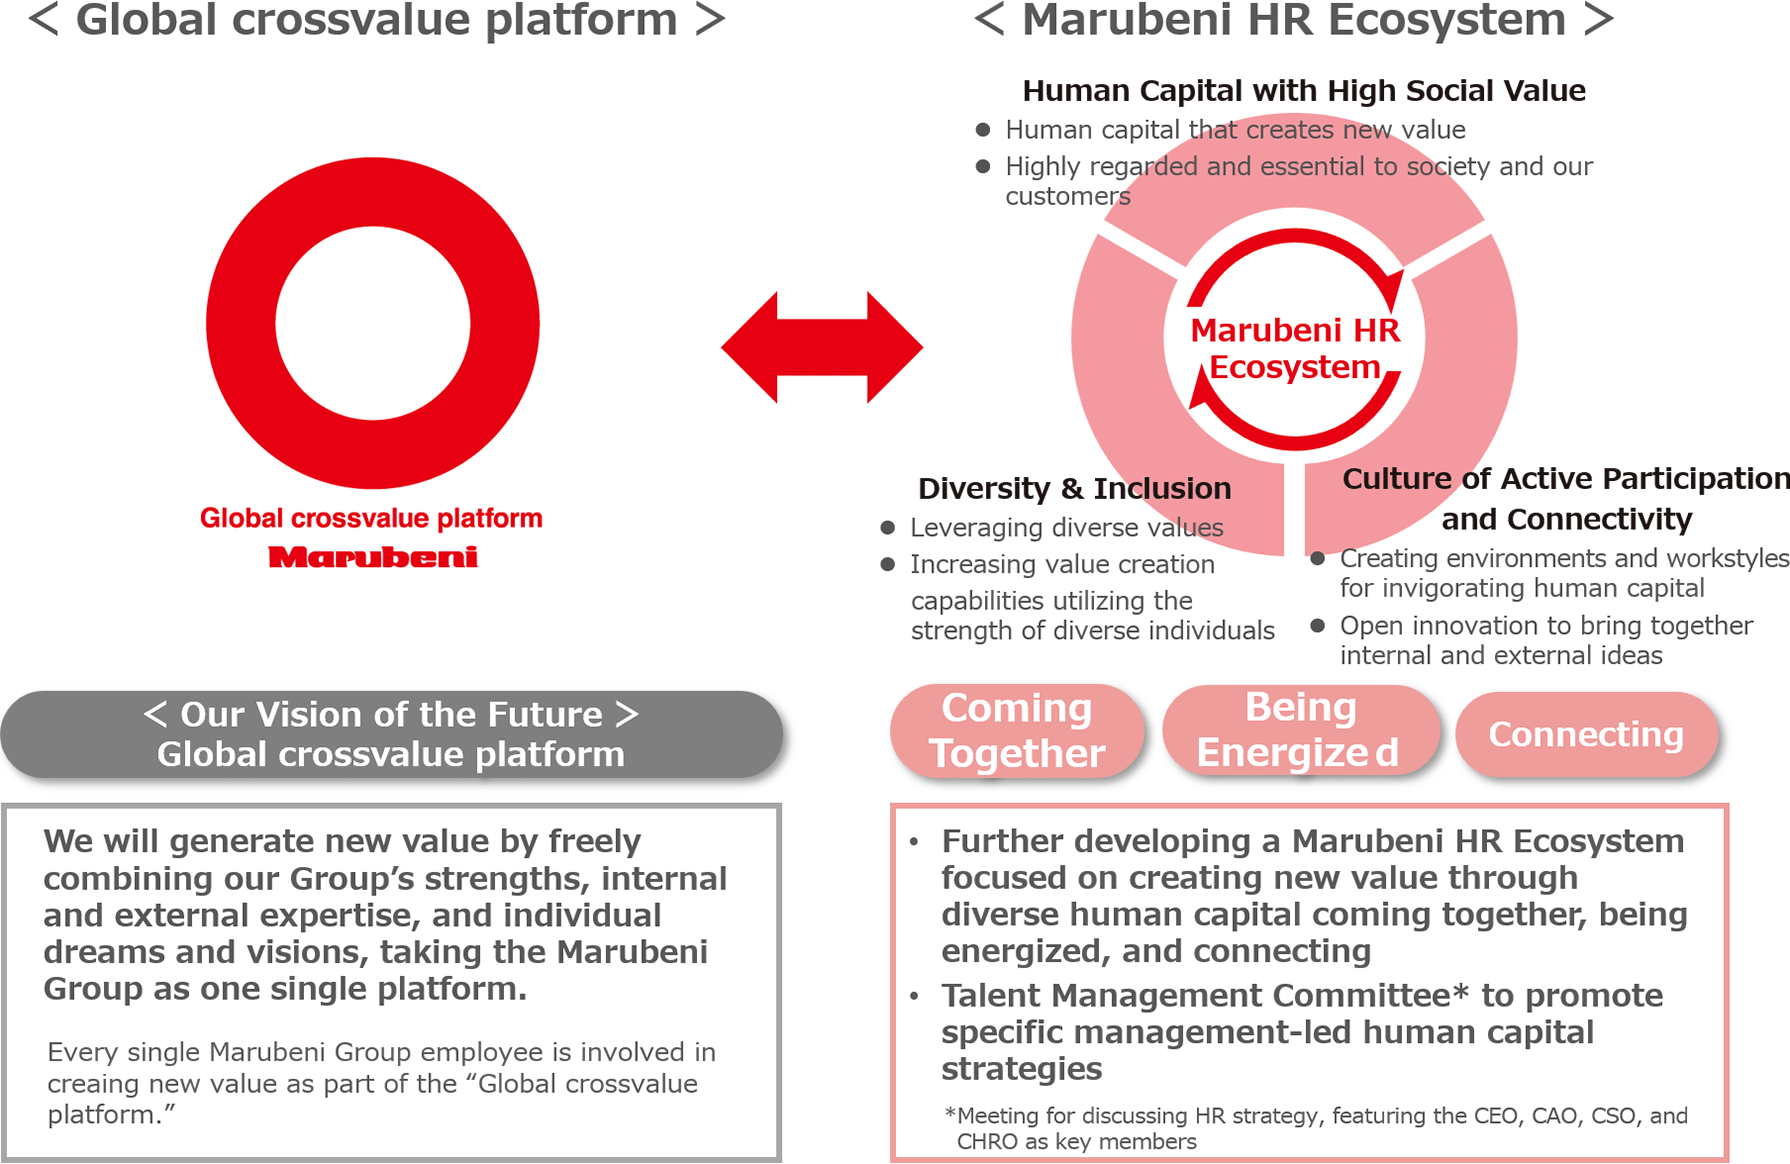 Global crossvalue platform and Marubeni HR Ecosystem